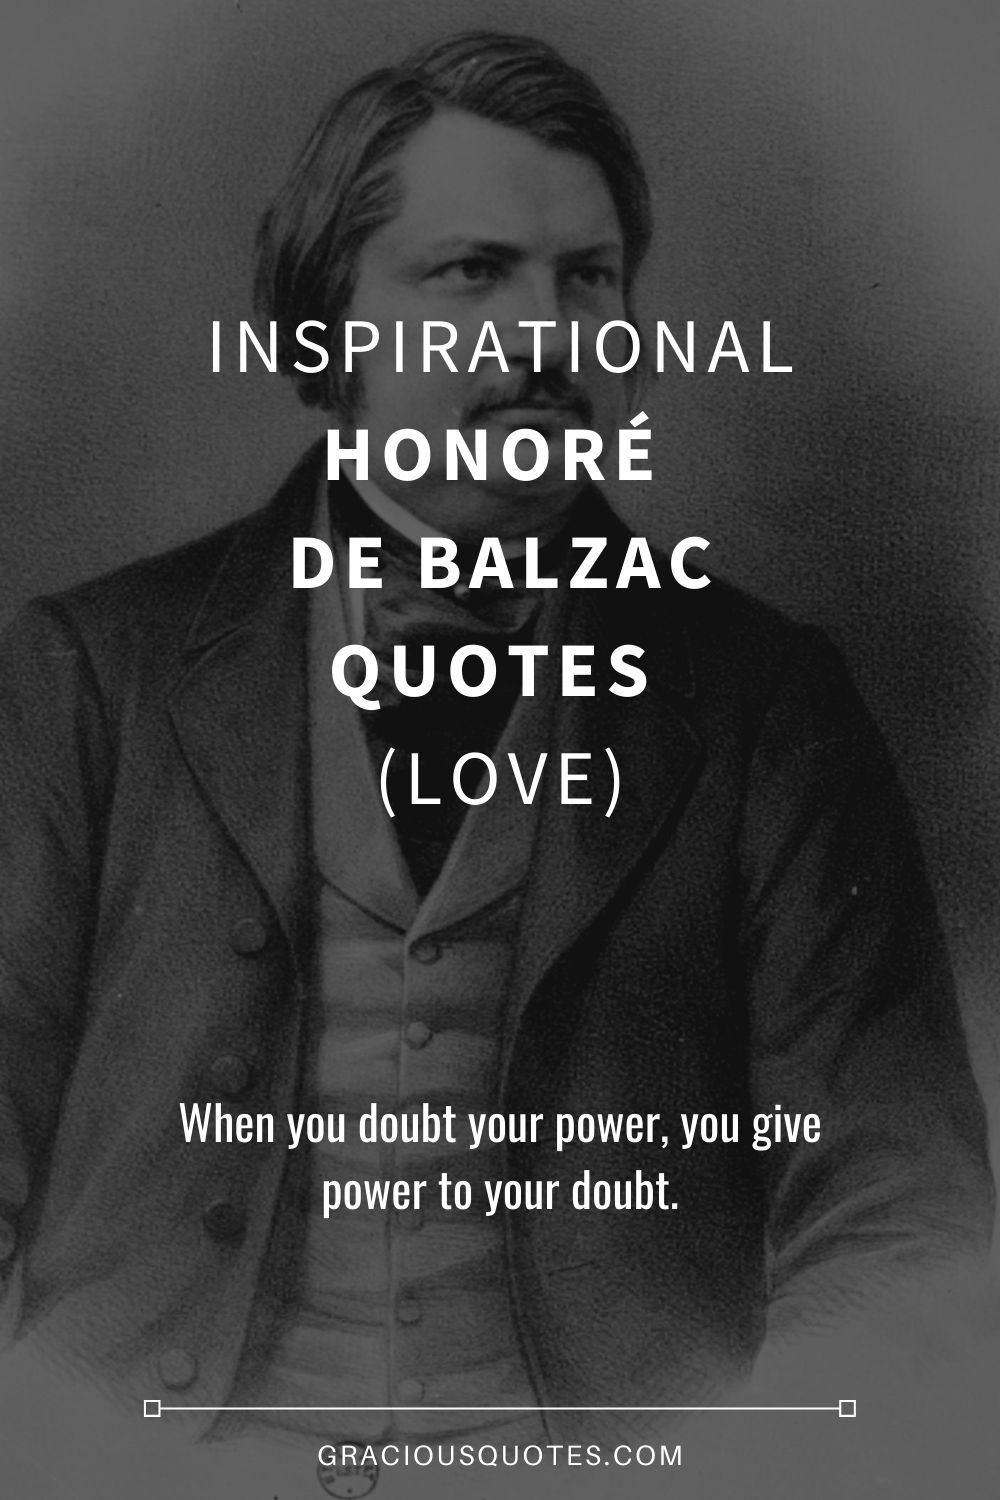 Inspirational Honoré de Balzac Quotes (LOVE) - Gracious Quotes